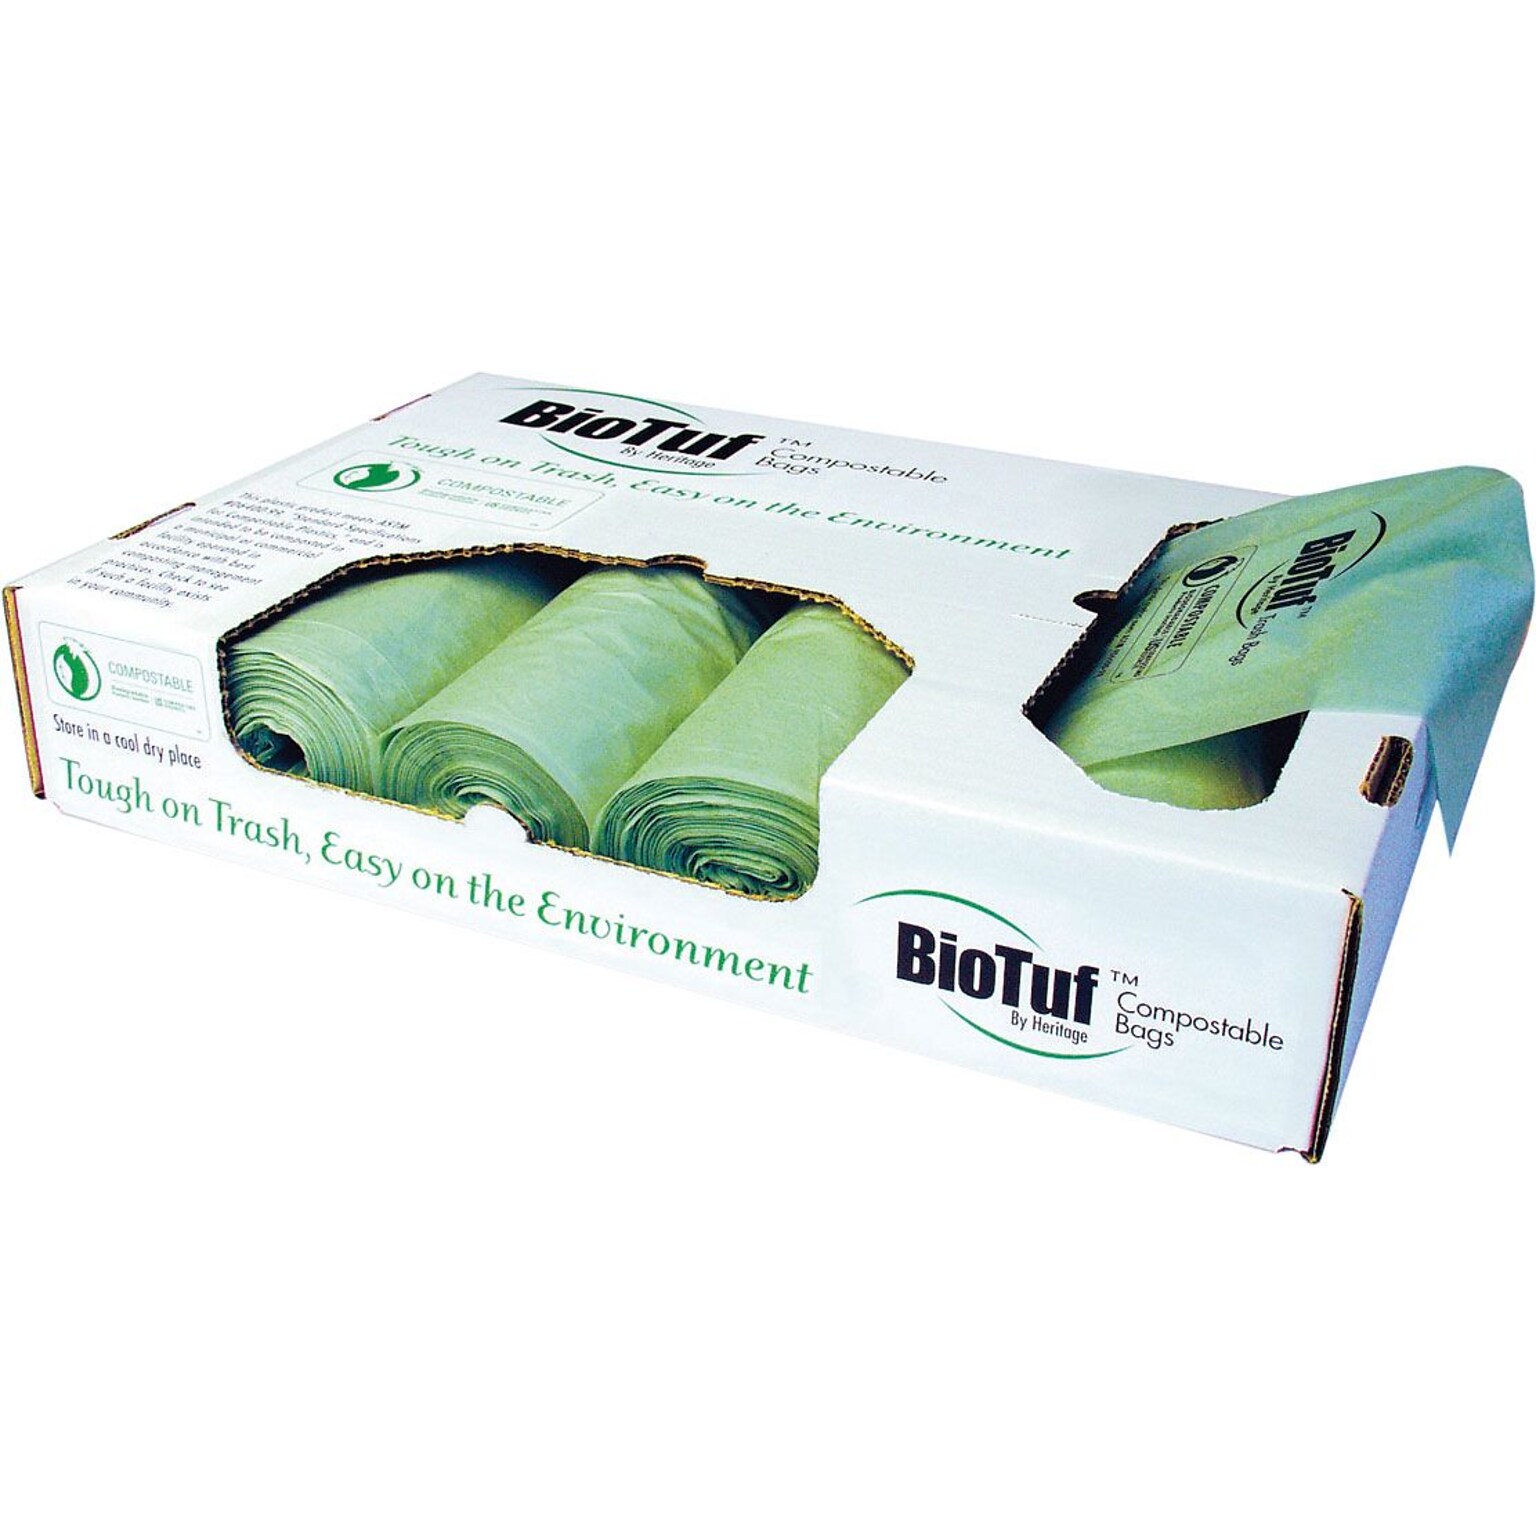 BioTuf 60-64 Gallon Compostable Industrial Trash Bag, 47 x 60, Low Density, 1 Mil, Green, 5 Rolls (Y9460YE R01)